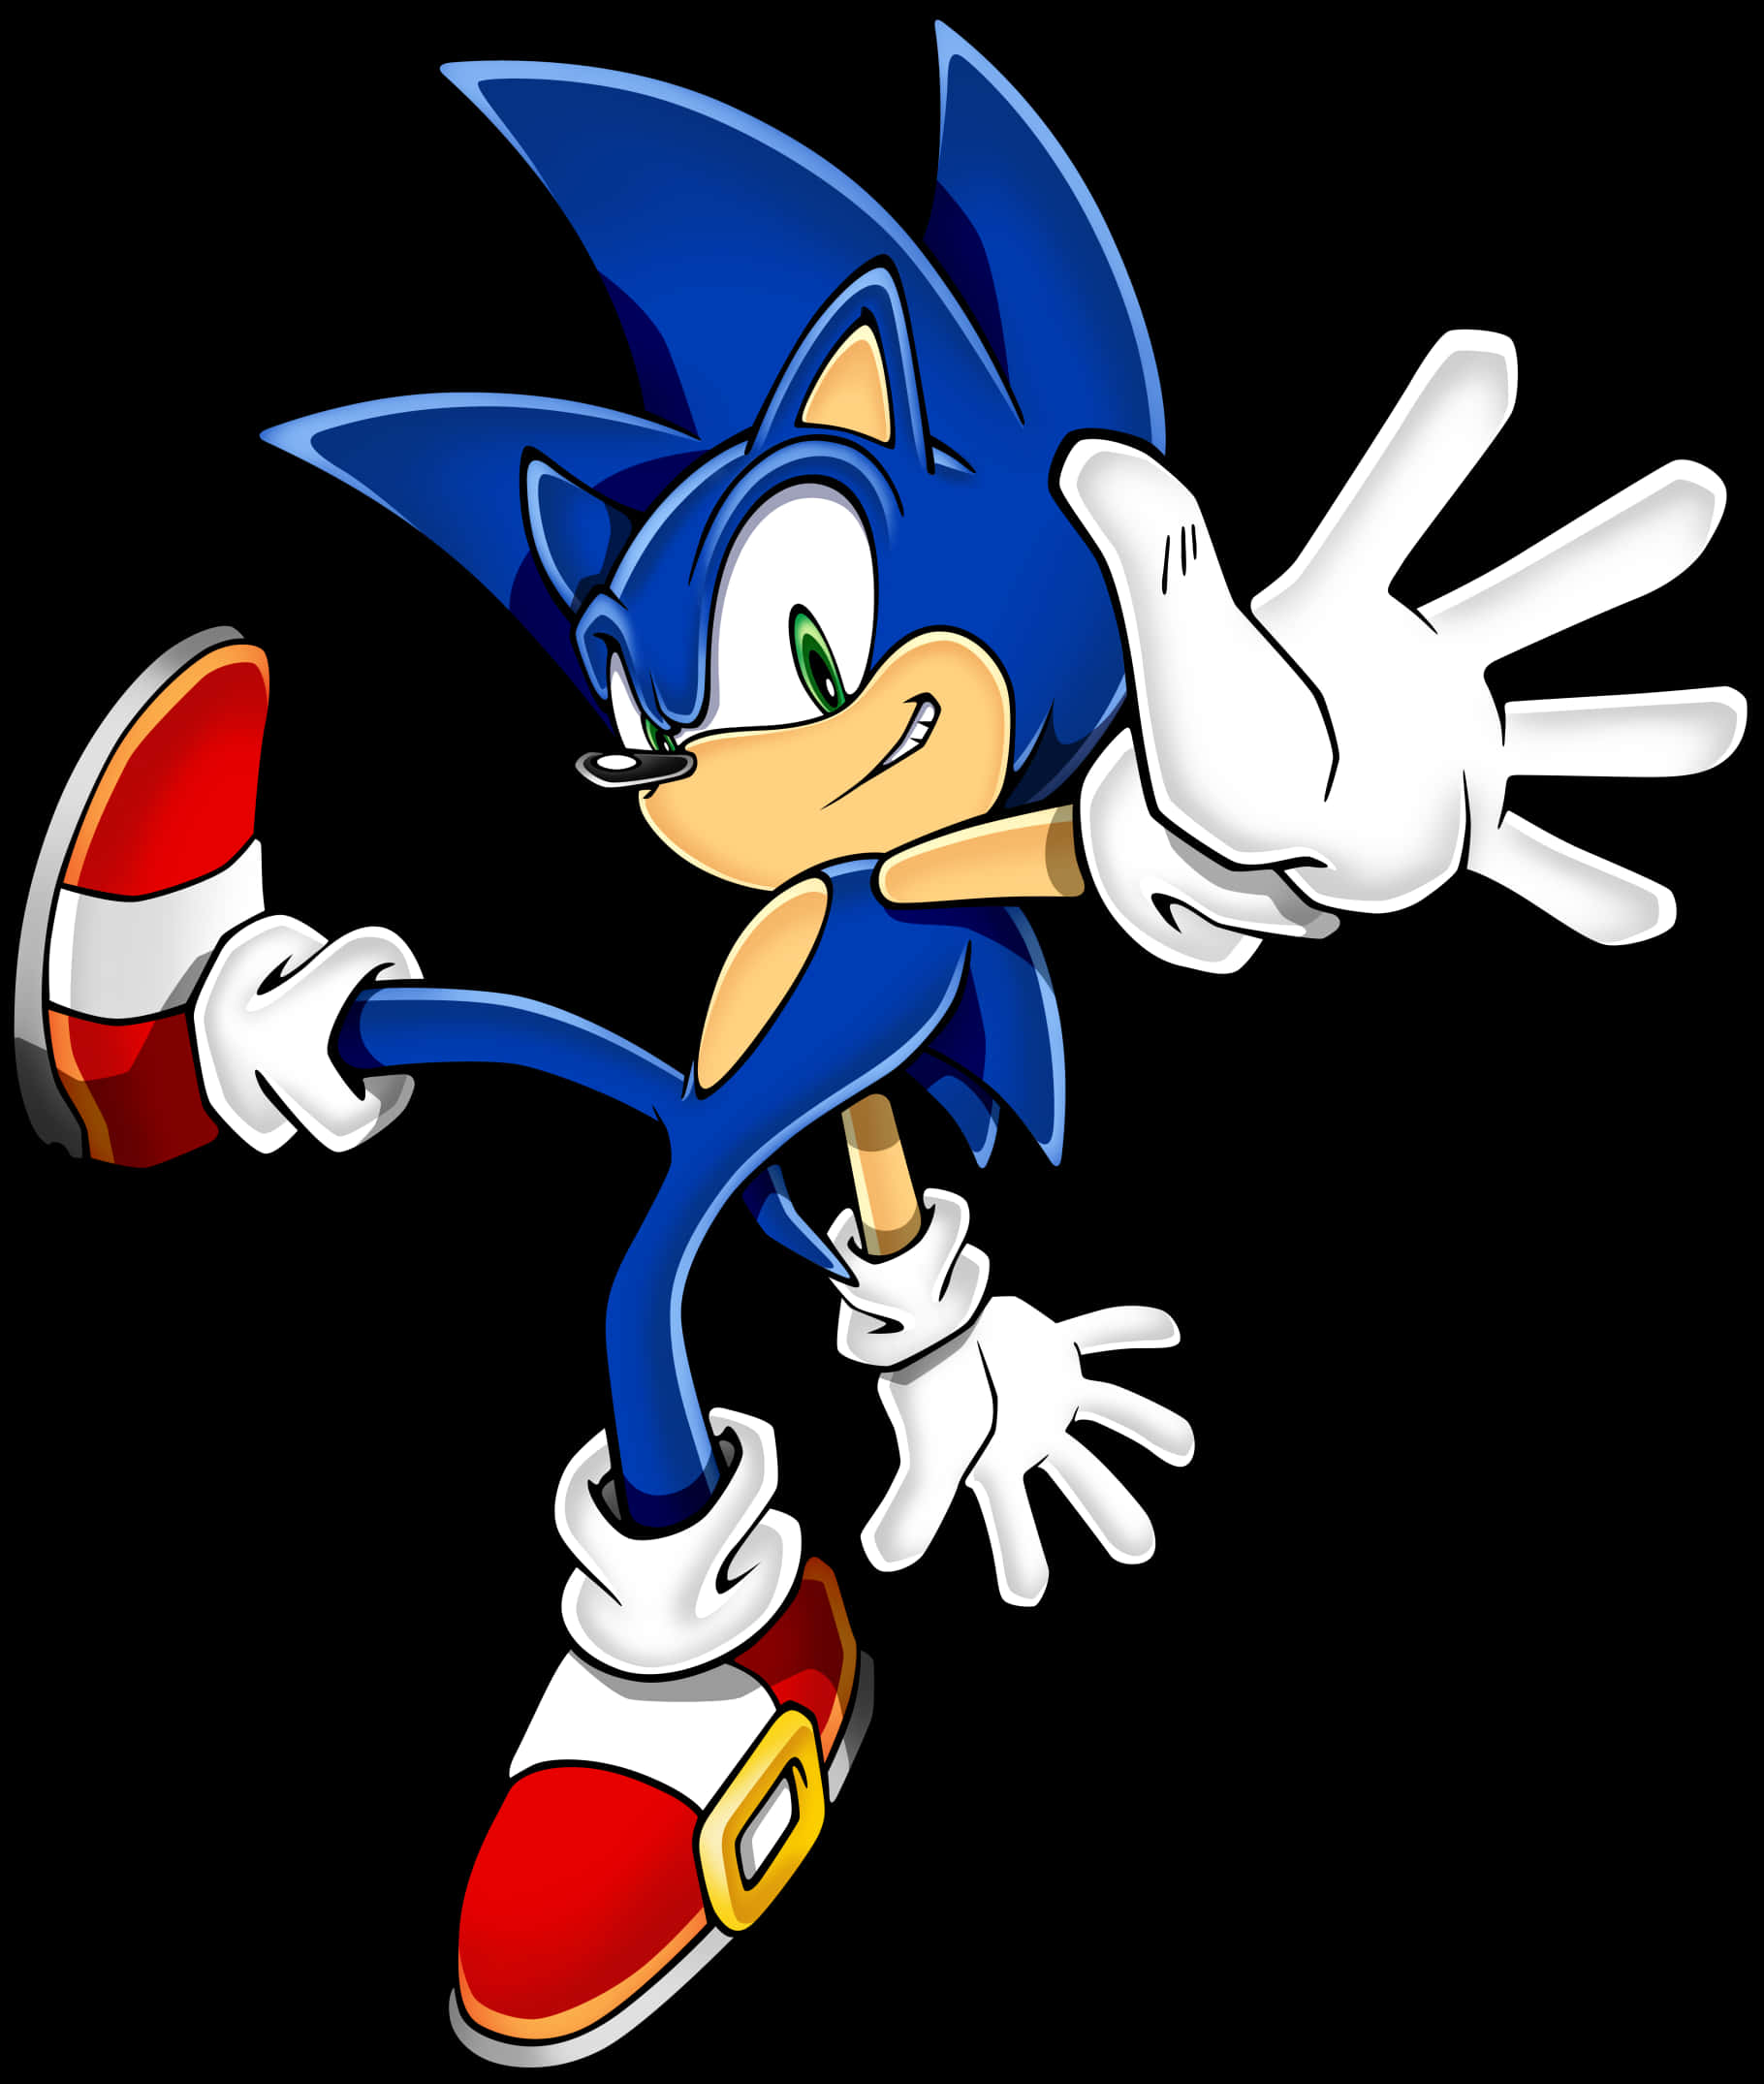 Cartoon Character Of A Blue Hedgehog